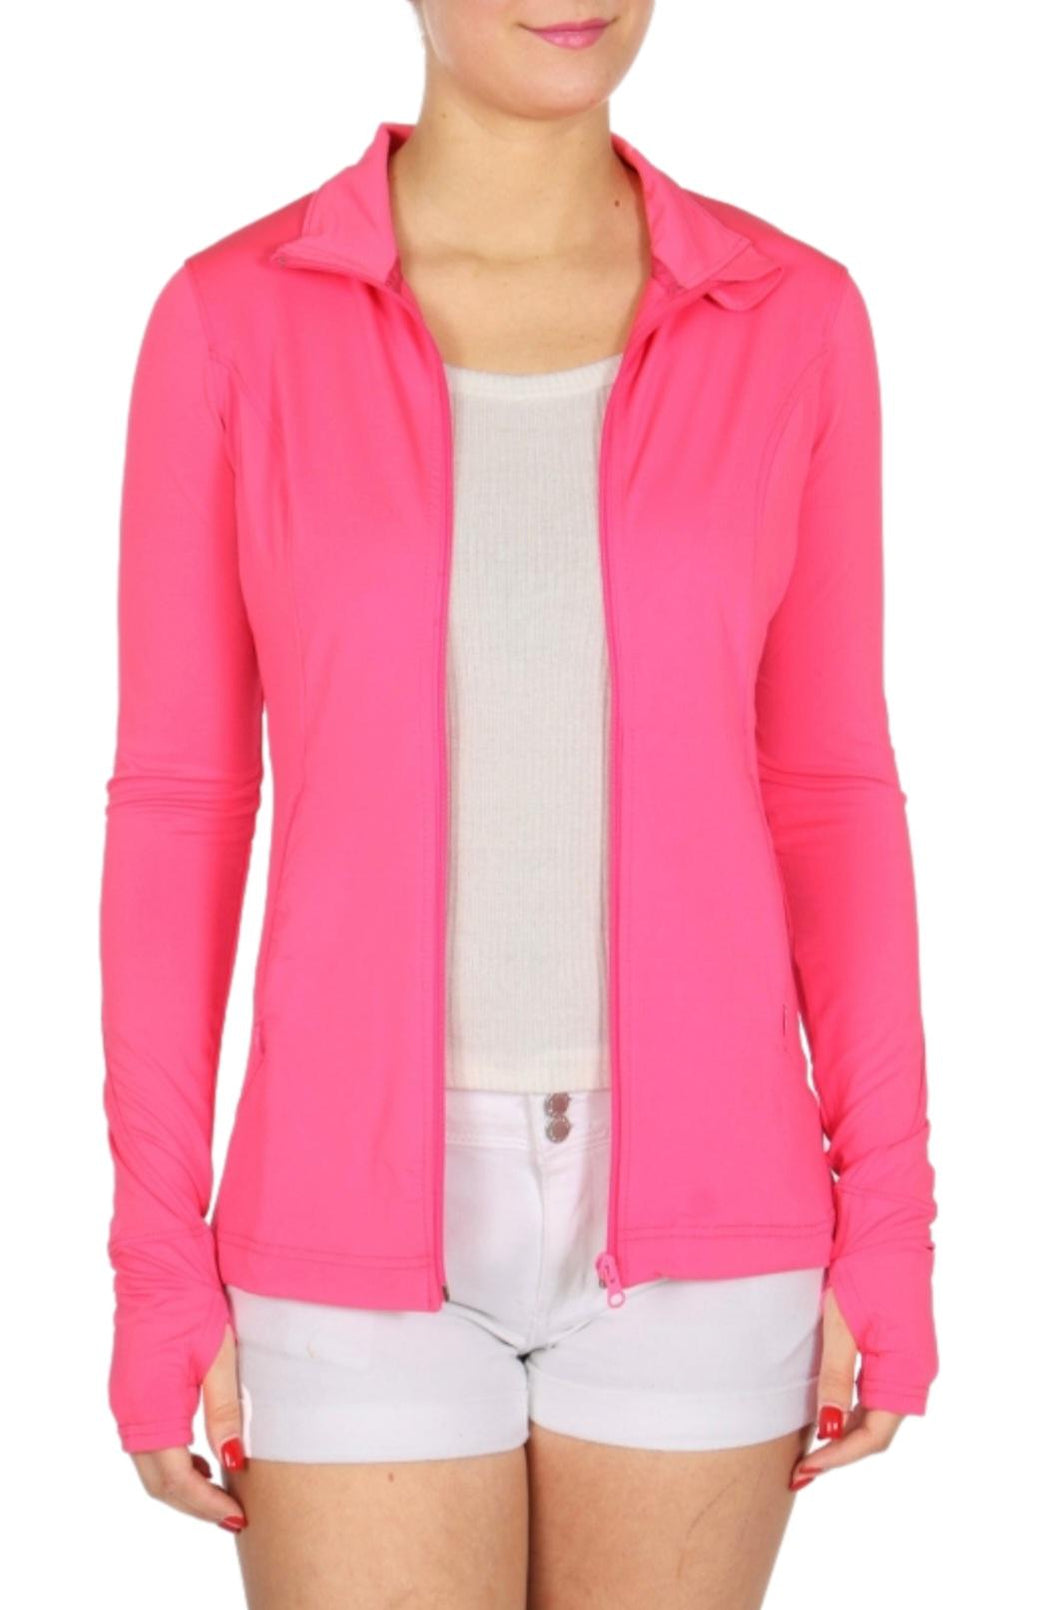 Women's Neon Pink Bodycon Crossfit Jacket